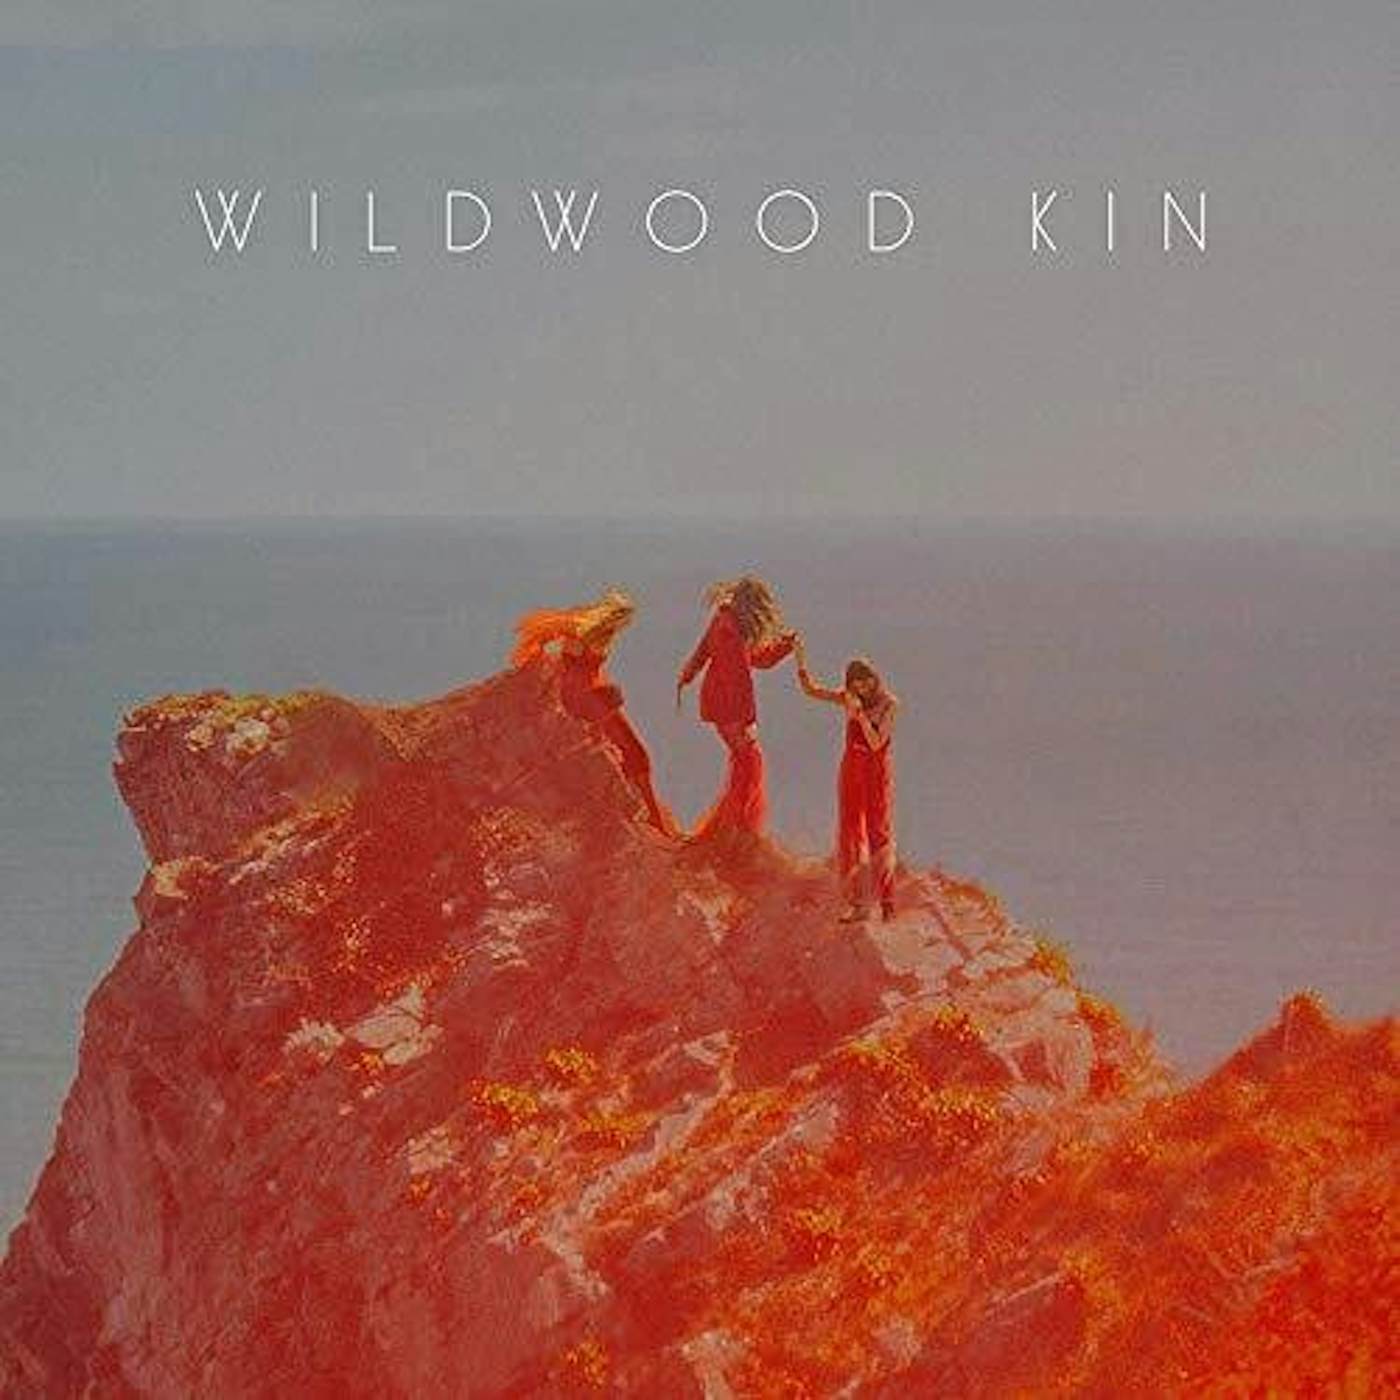 Wildwood Kin Vinyl Record